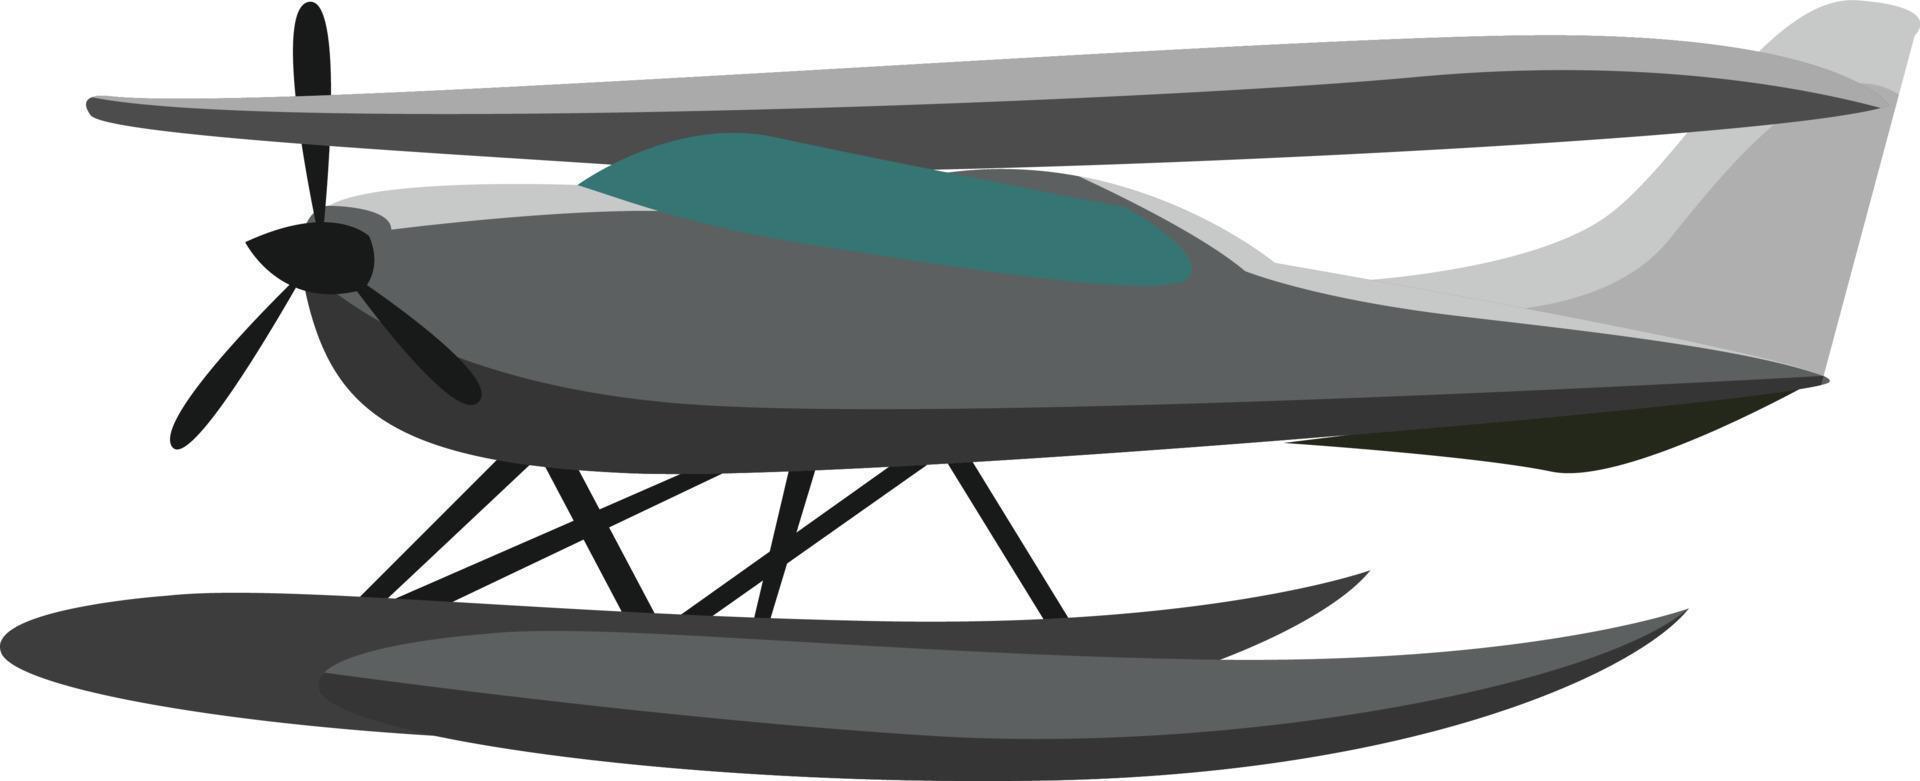 Seaplane on water, illustration, vector on white background